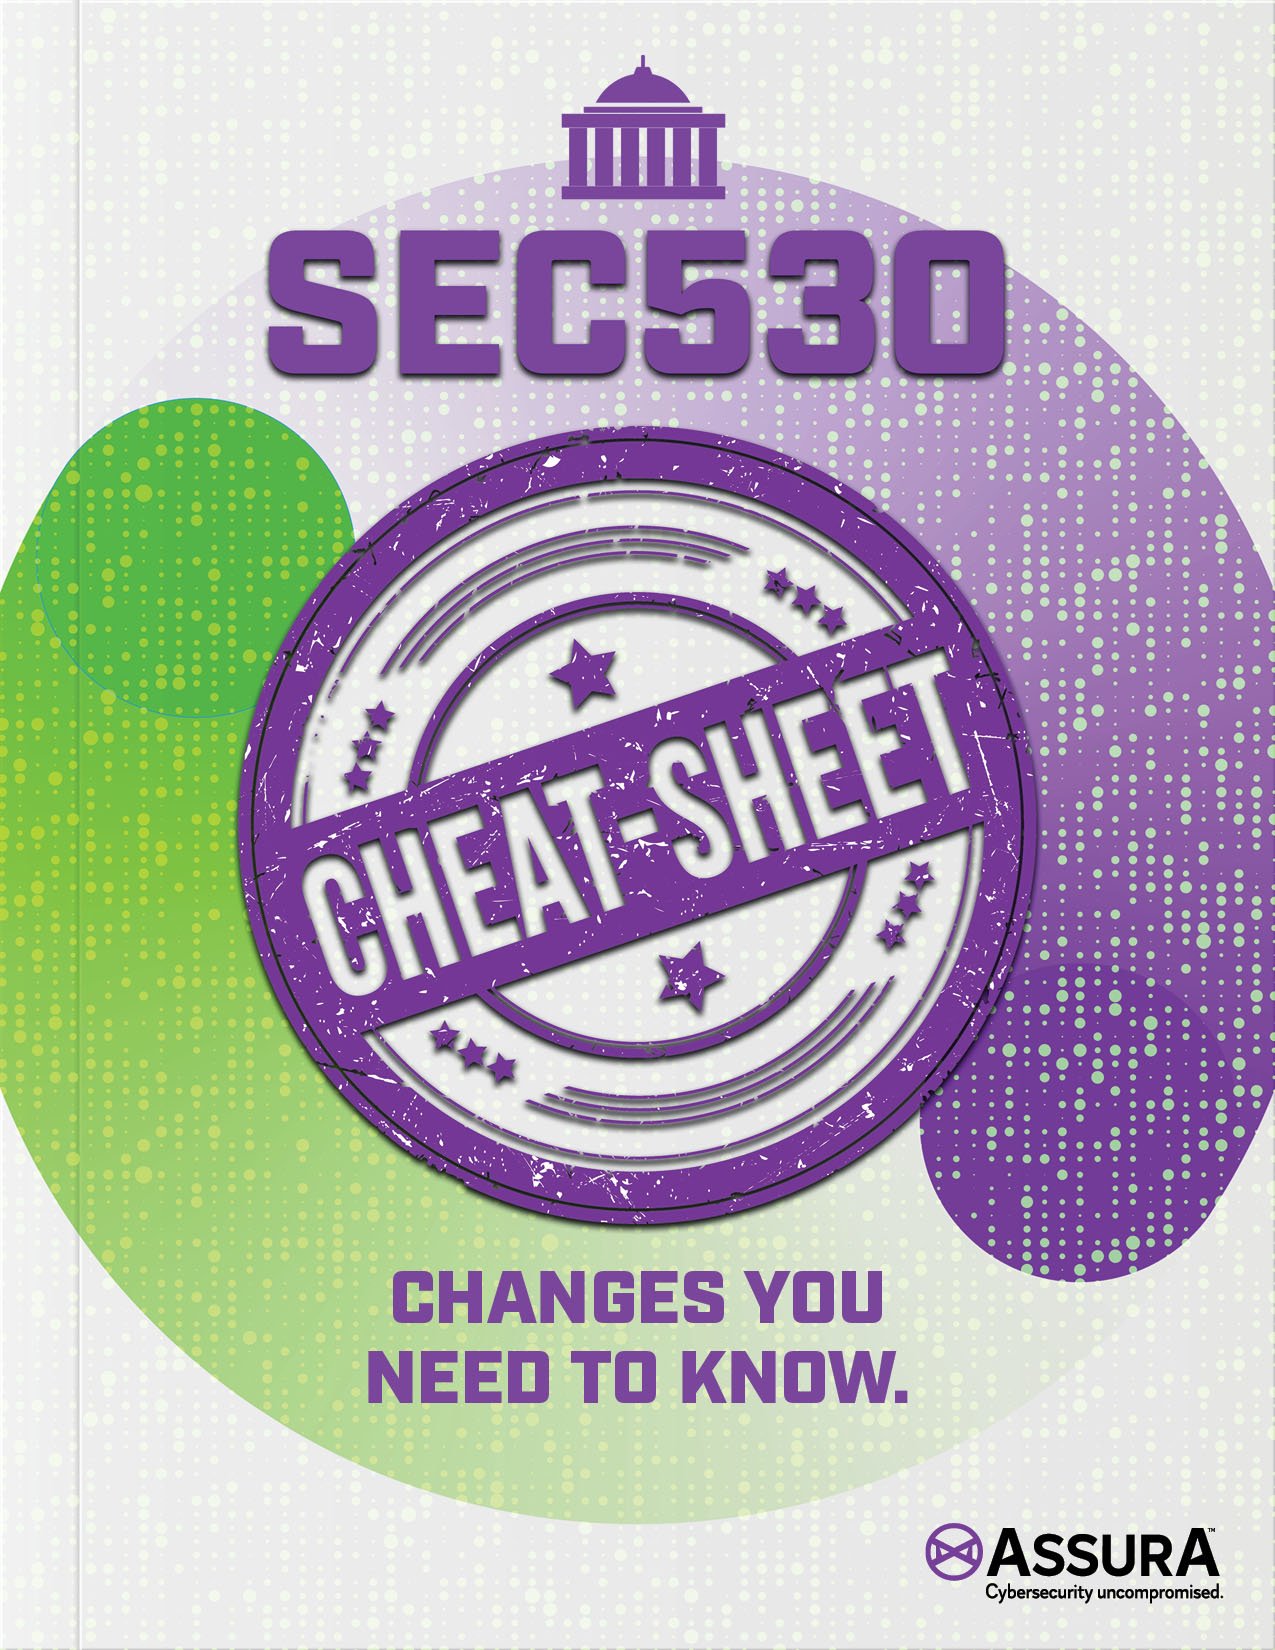 SEC530 Cheat Sheet Cover